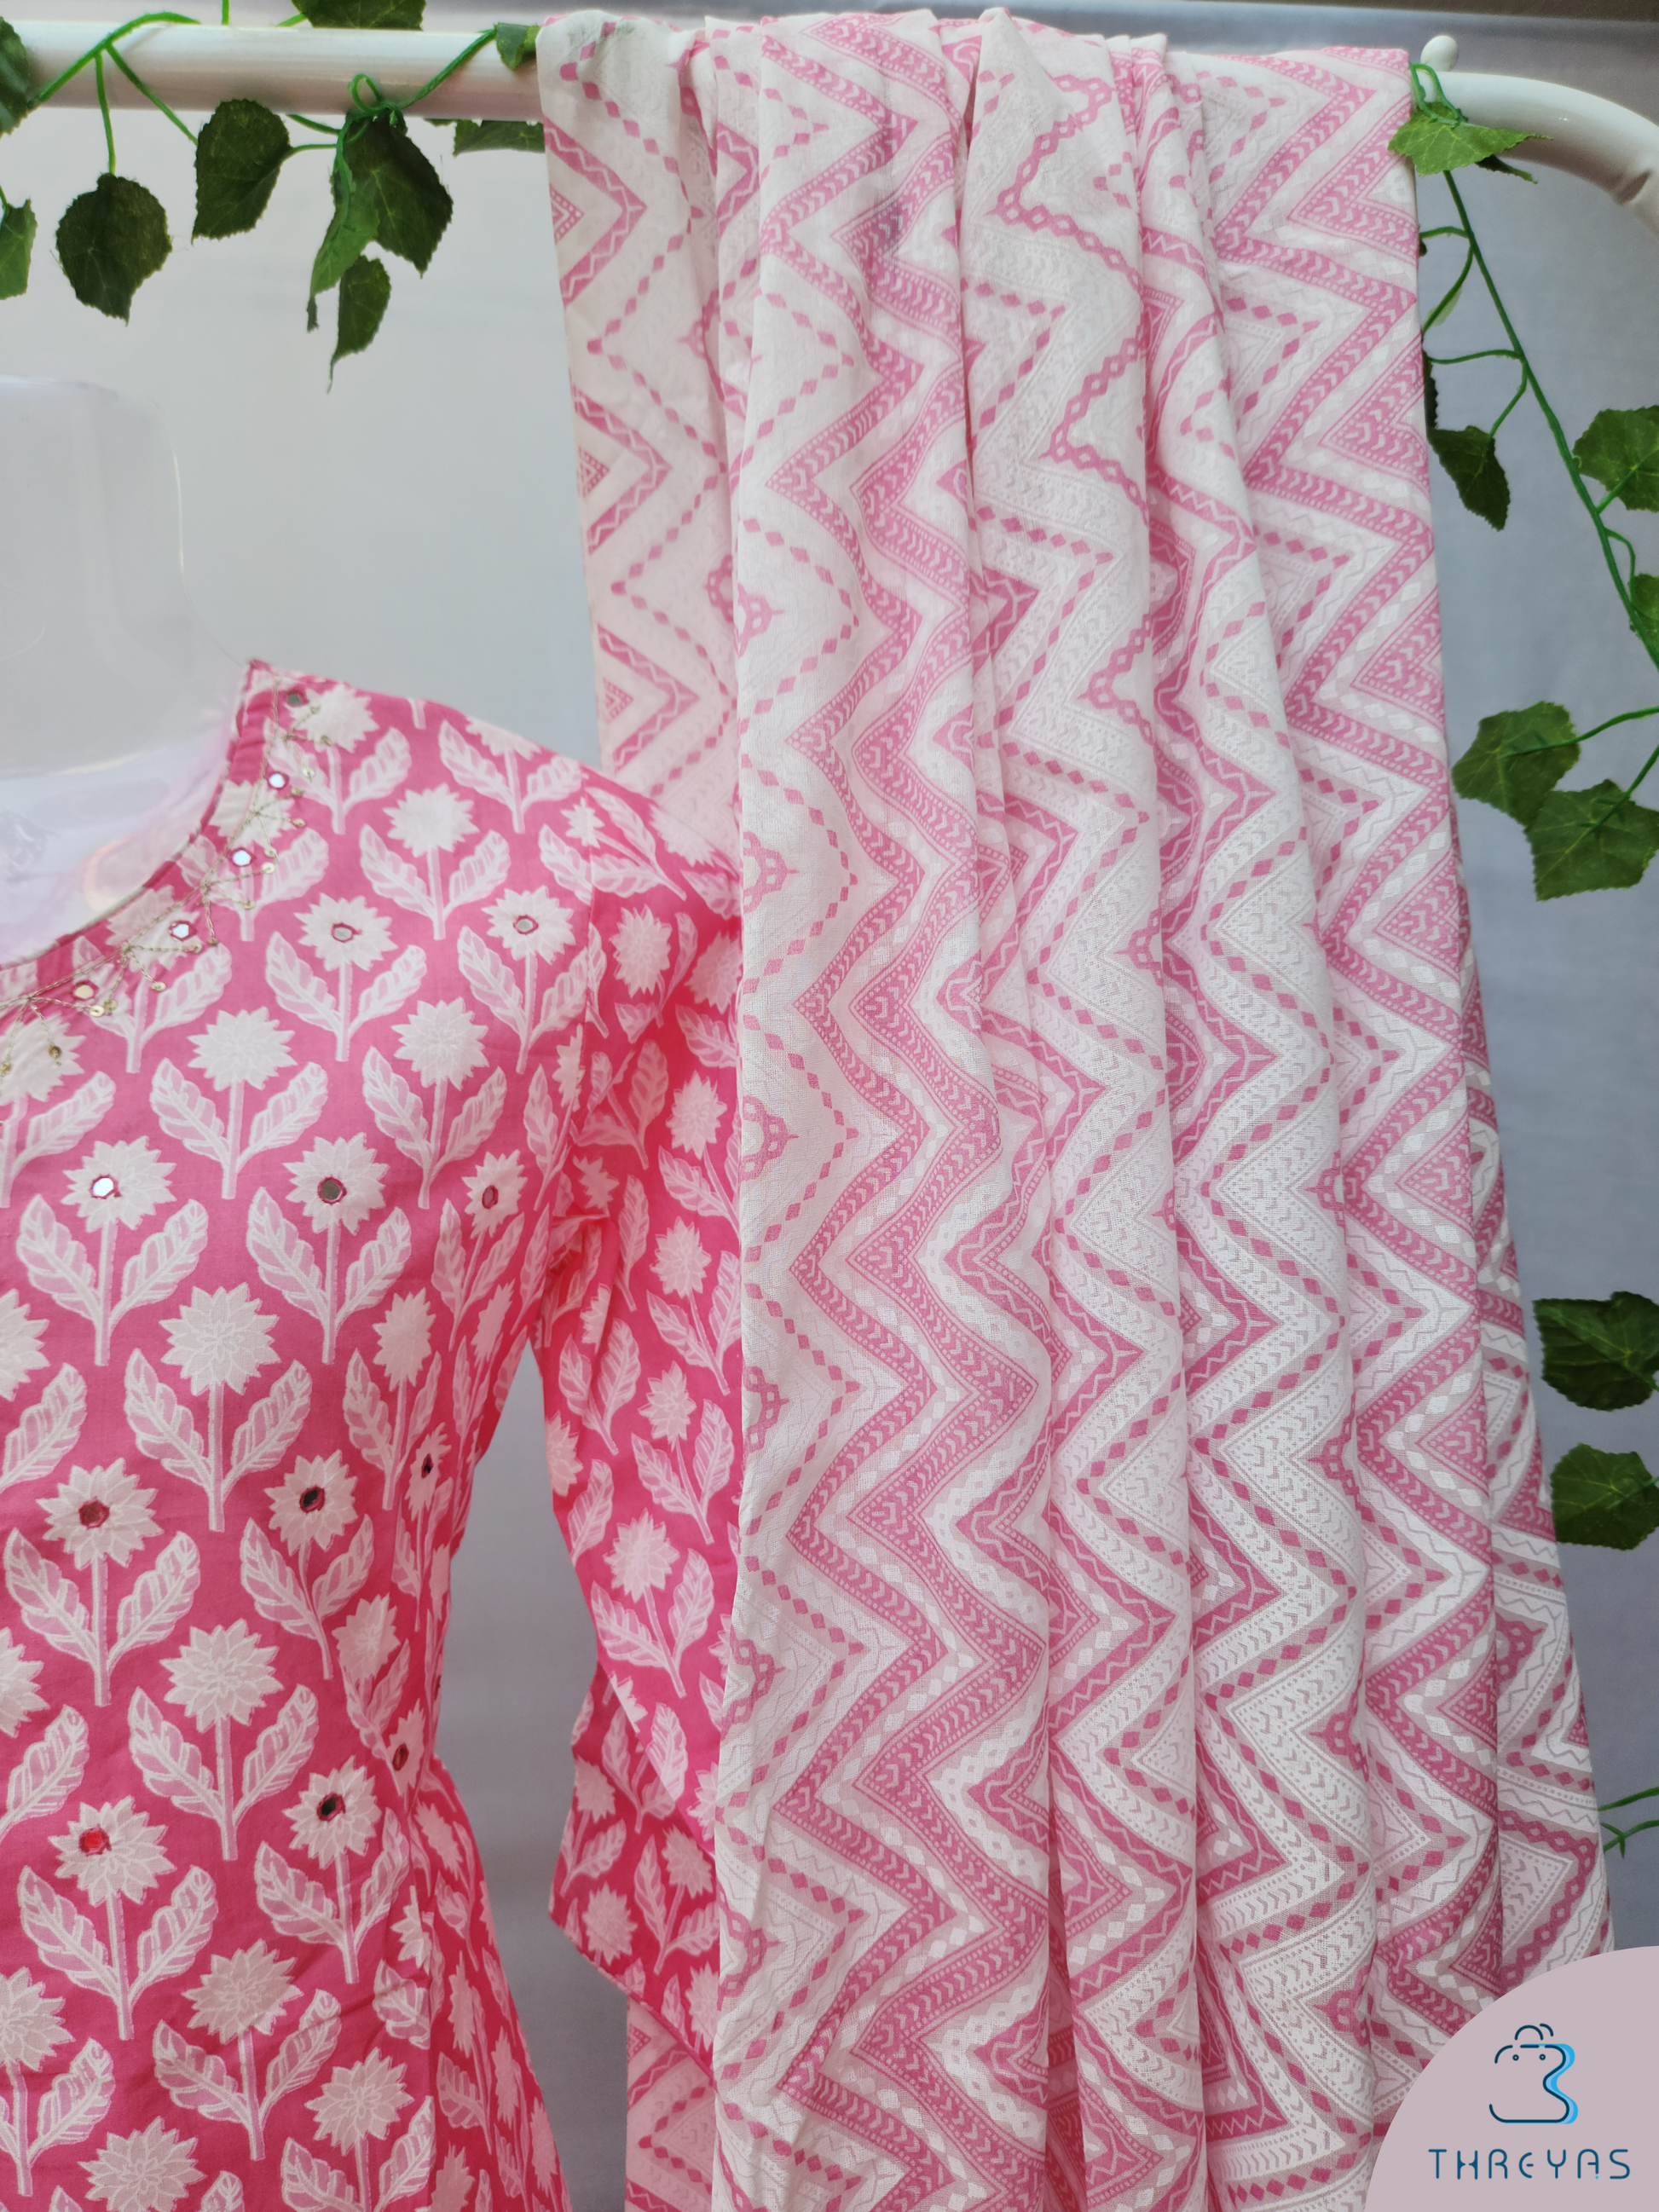 White and Pink Cotton  Kurthis Set for women |  Stylish  Kurthis &  Kurtis Sets for Women  | Threyas 